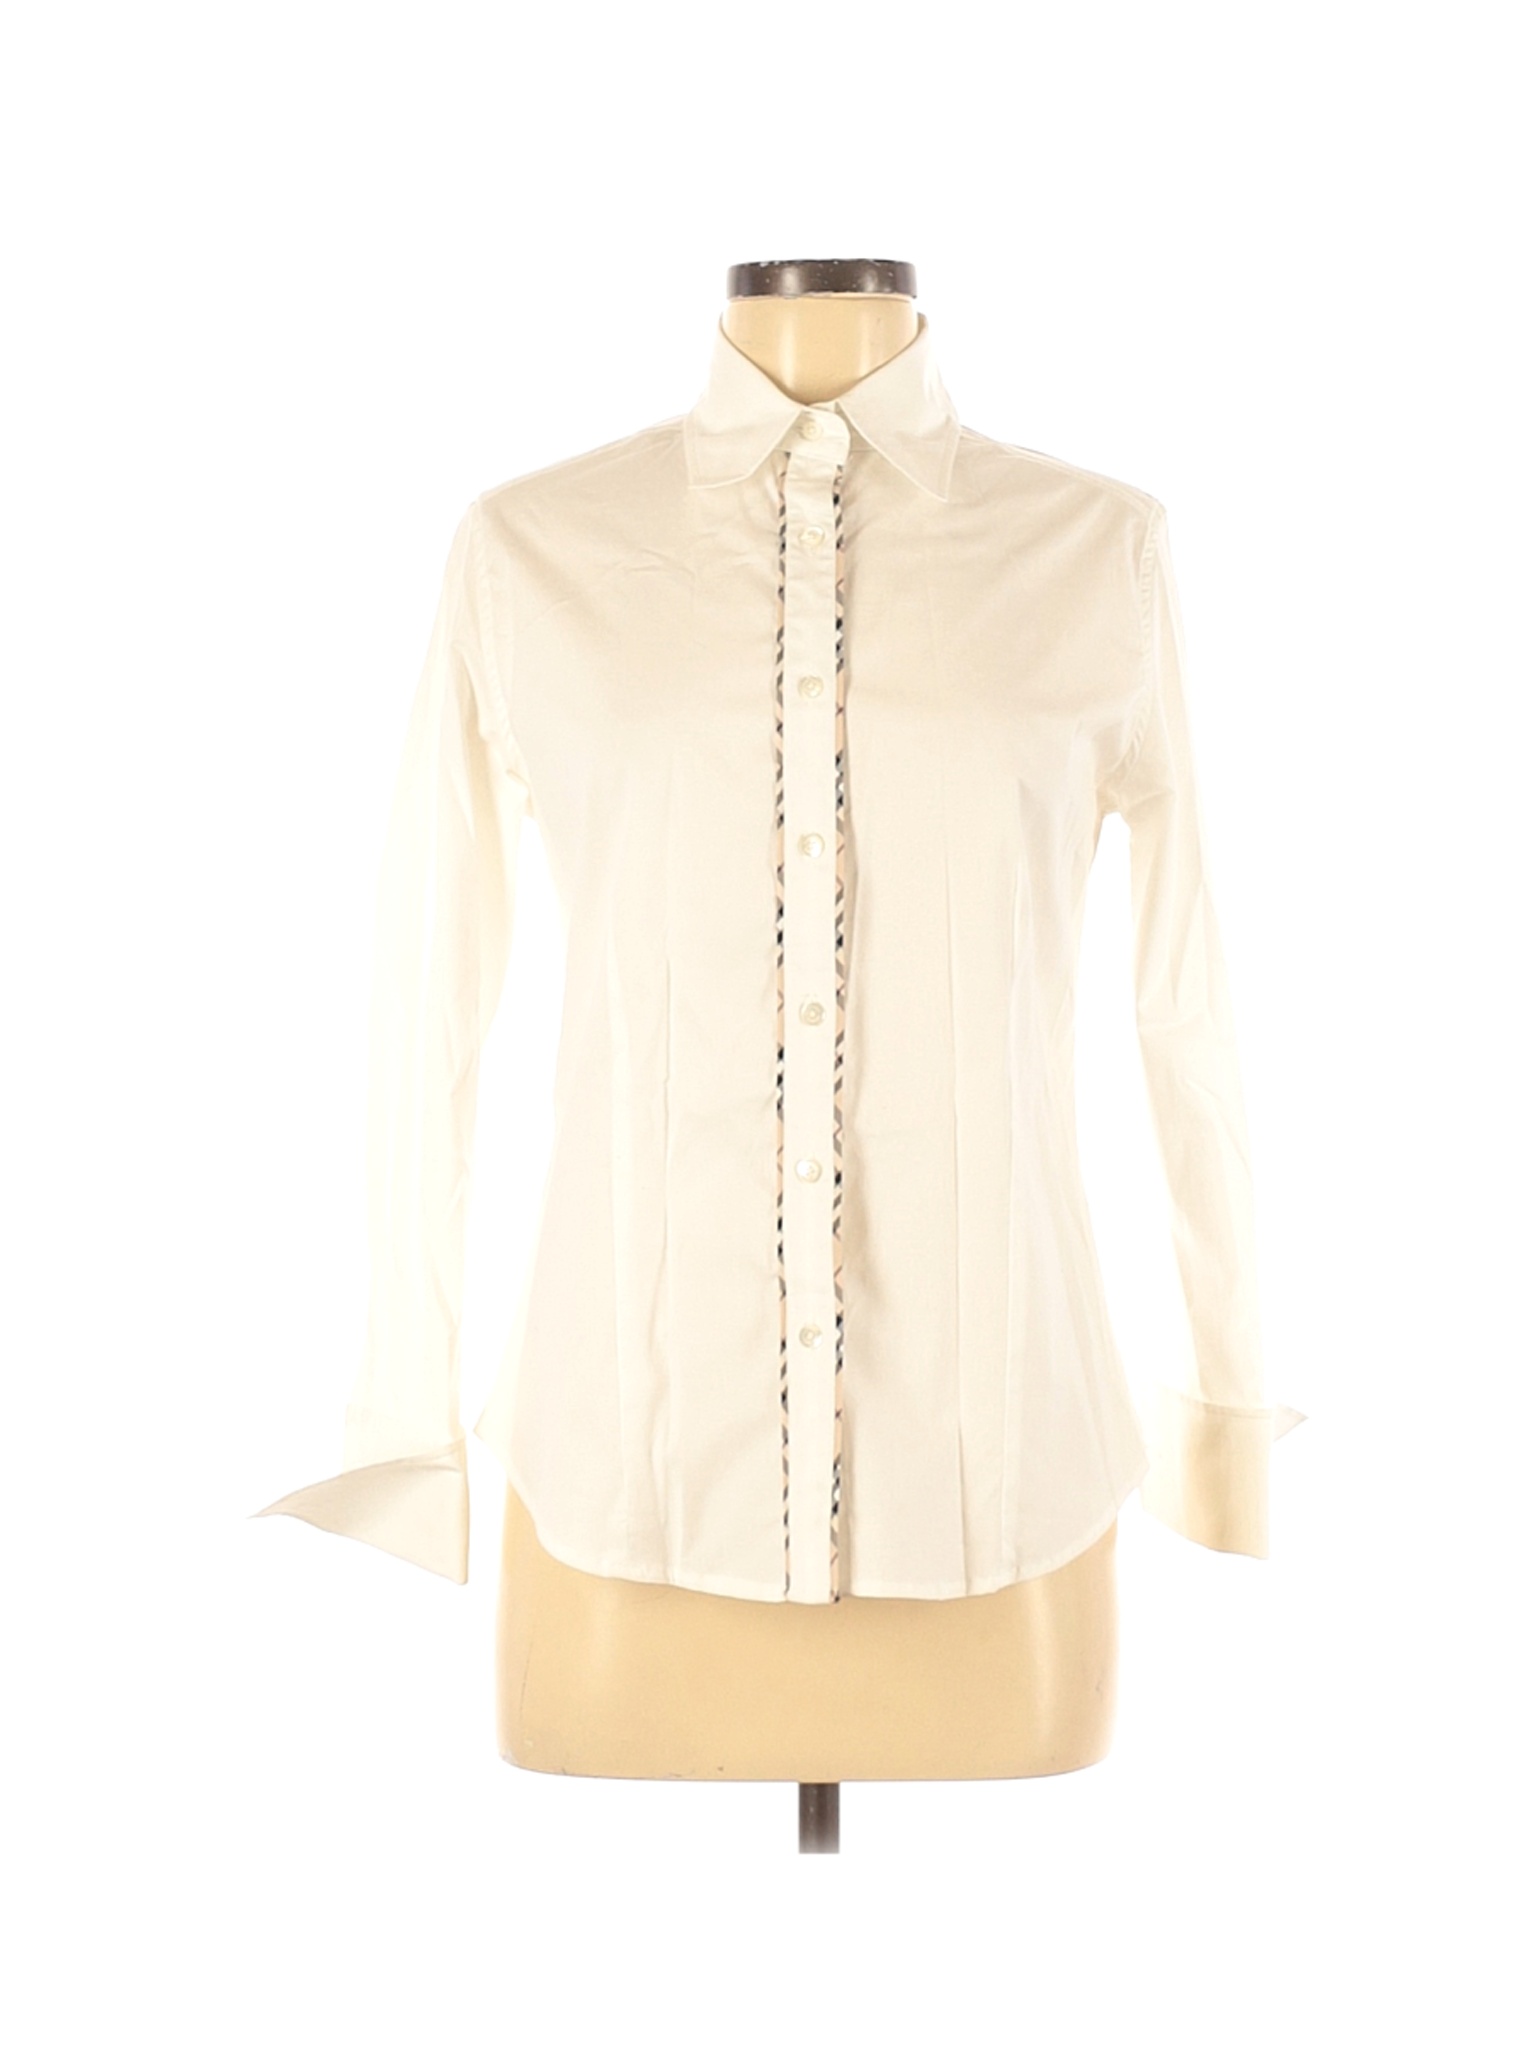 Burberry Women Ivory Long Sleeve Button-Down Shirt M | eBay